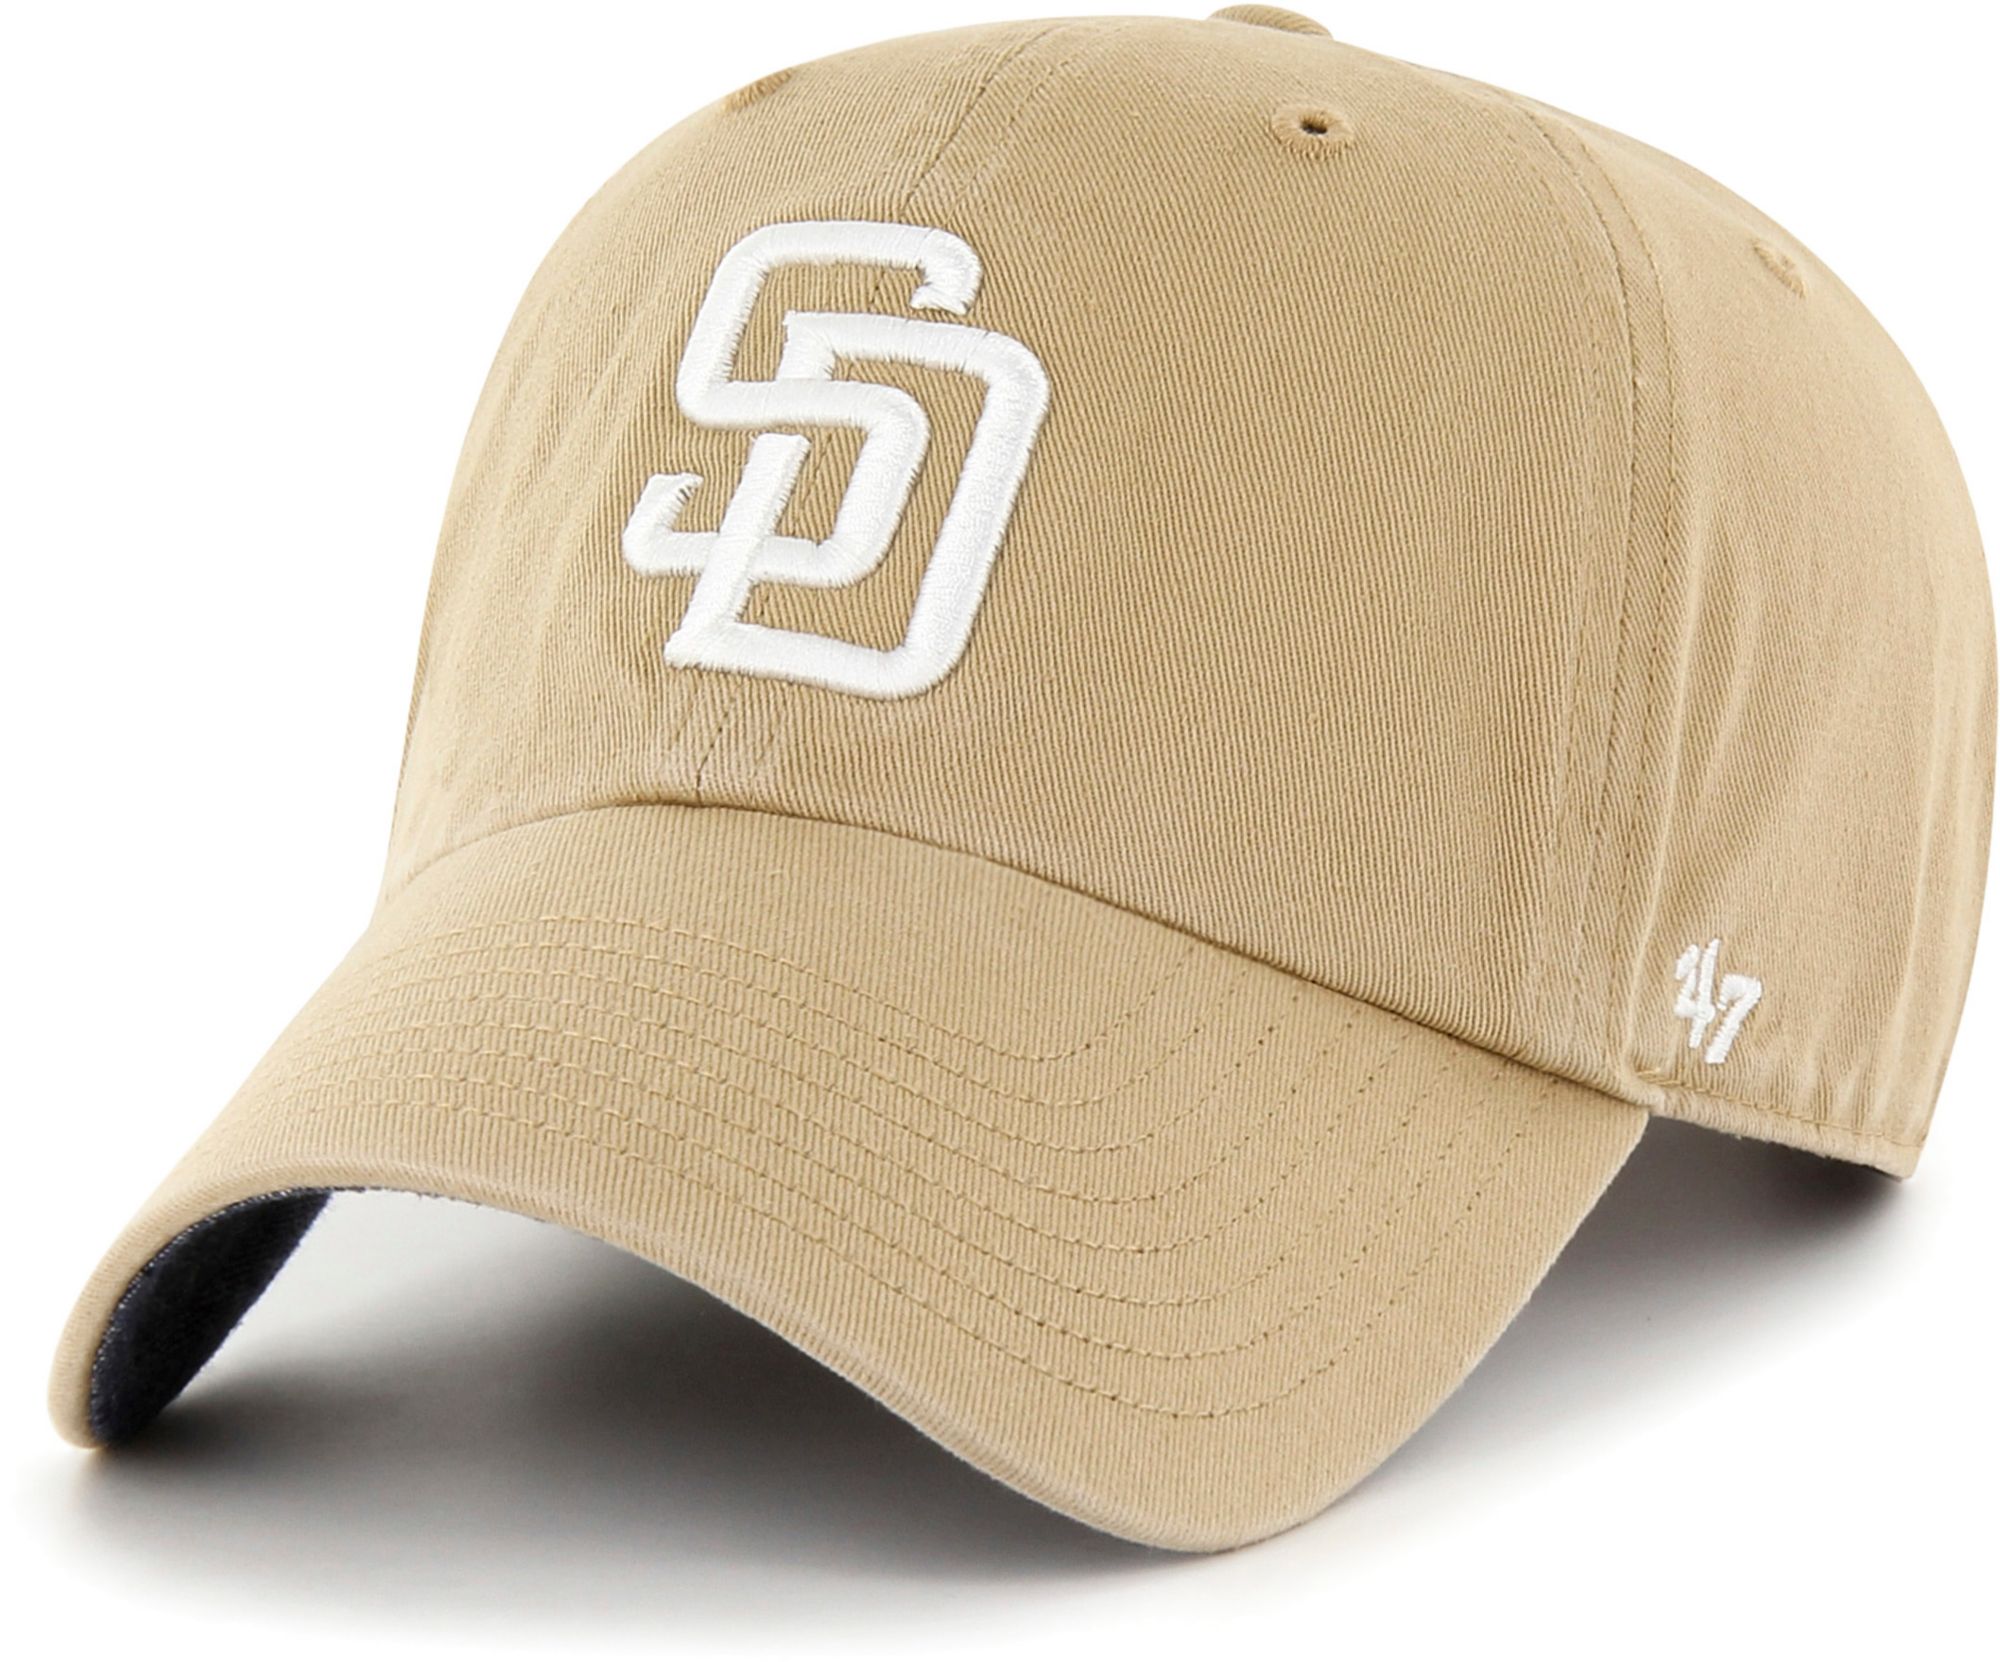 San Diego Padres '47 Team Throwback MVP Adjustable Hat - Khaki